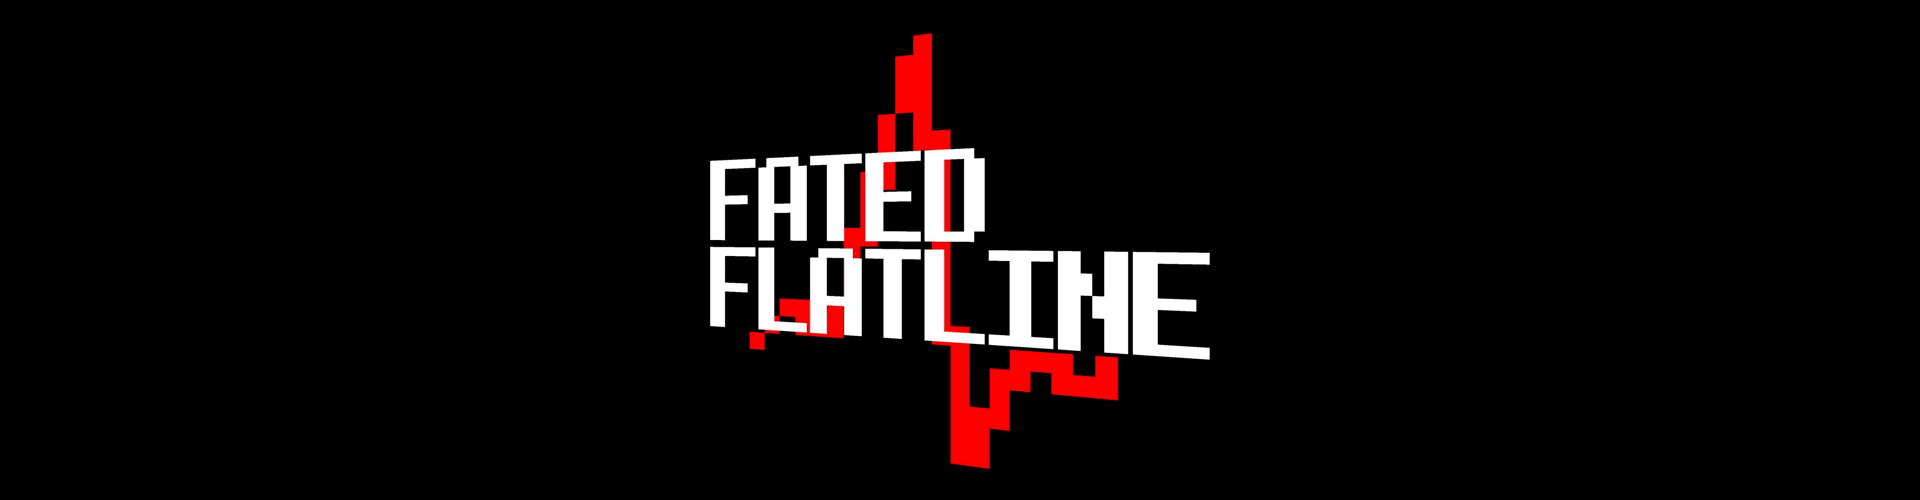 Fated Flatline